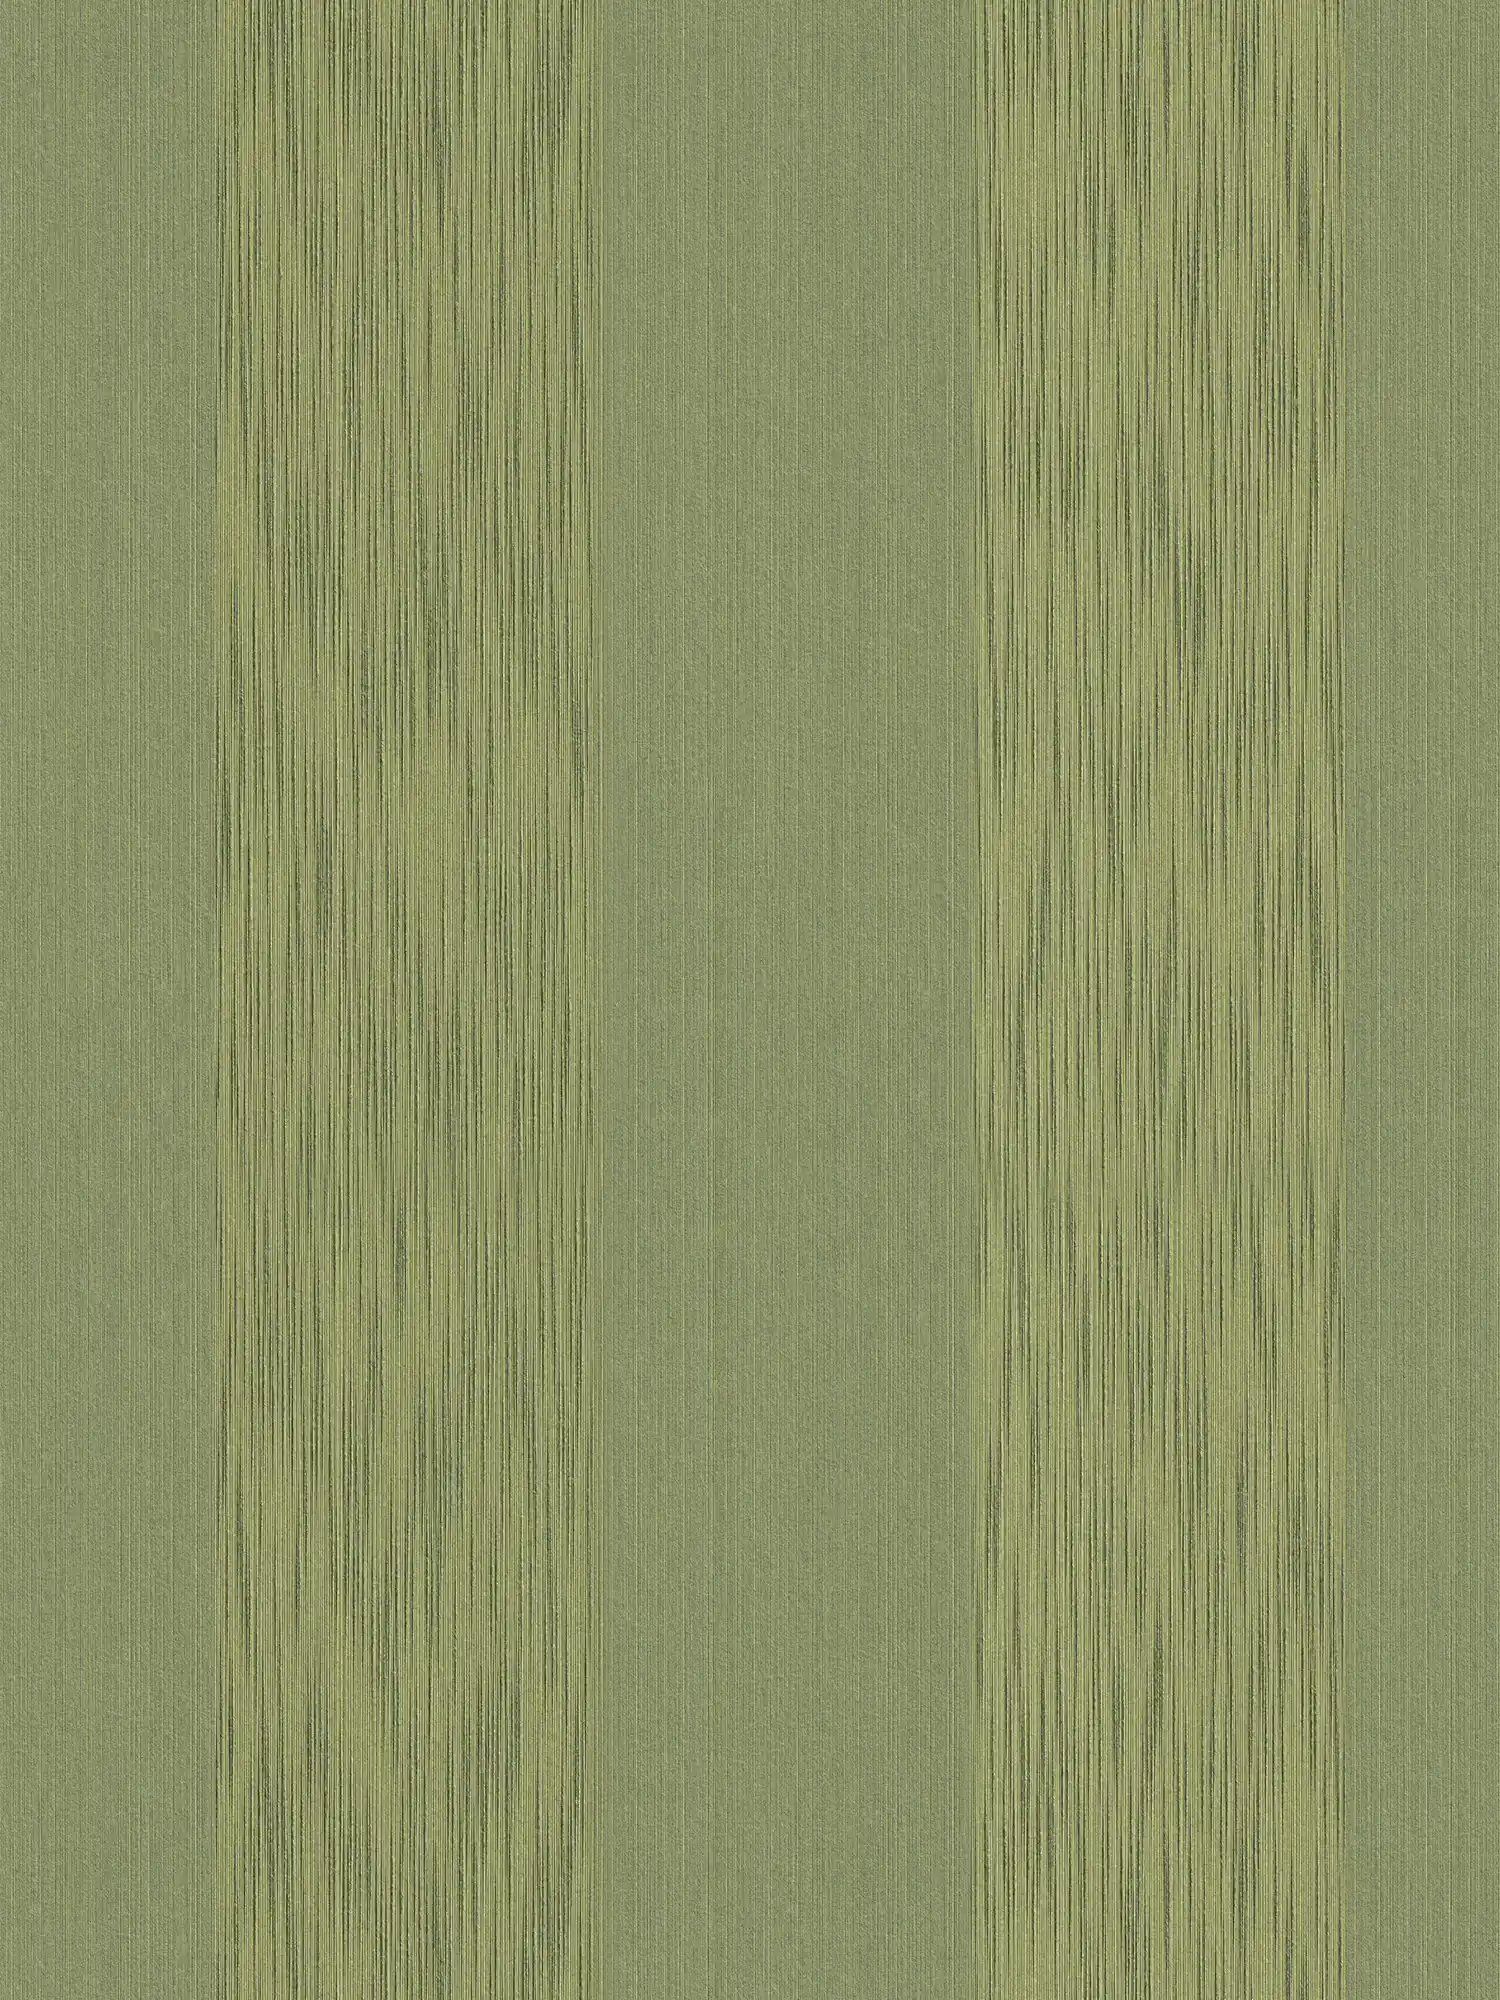 Papier peint texturé avec effet métallique & motif à rayures - Vert
